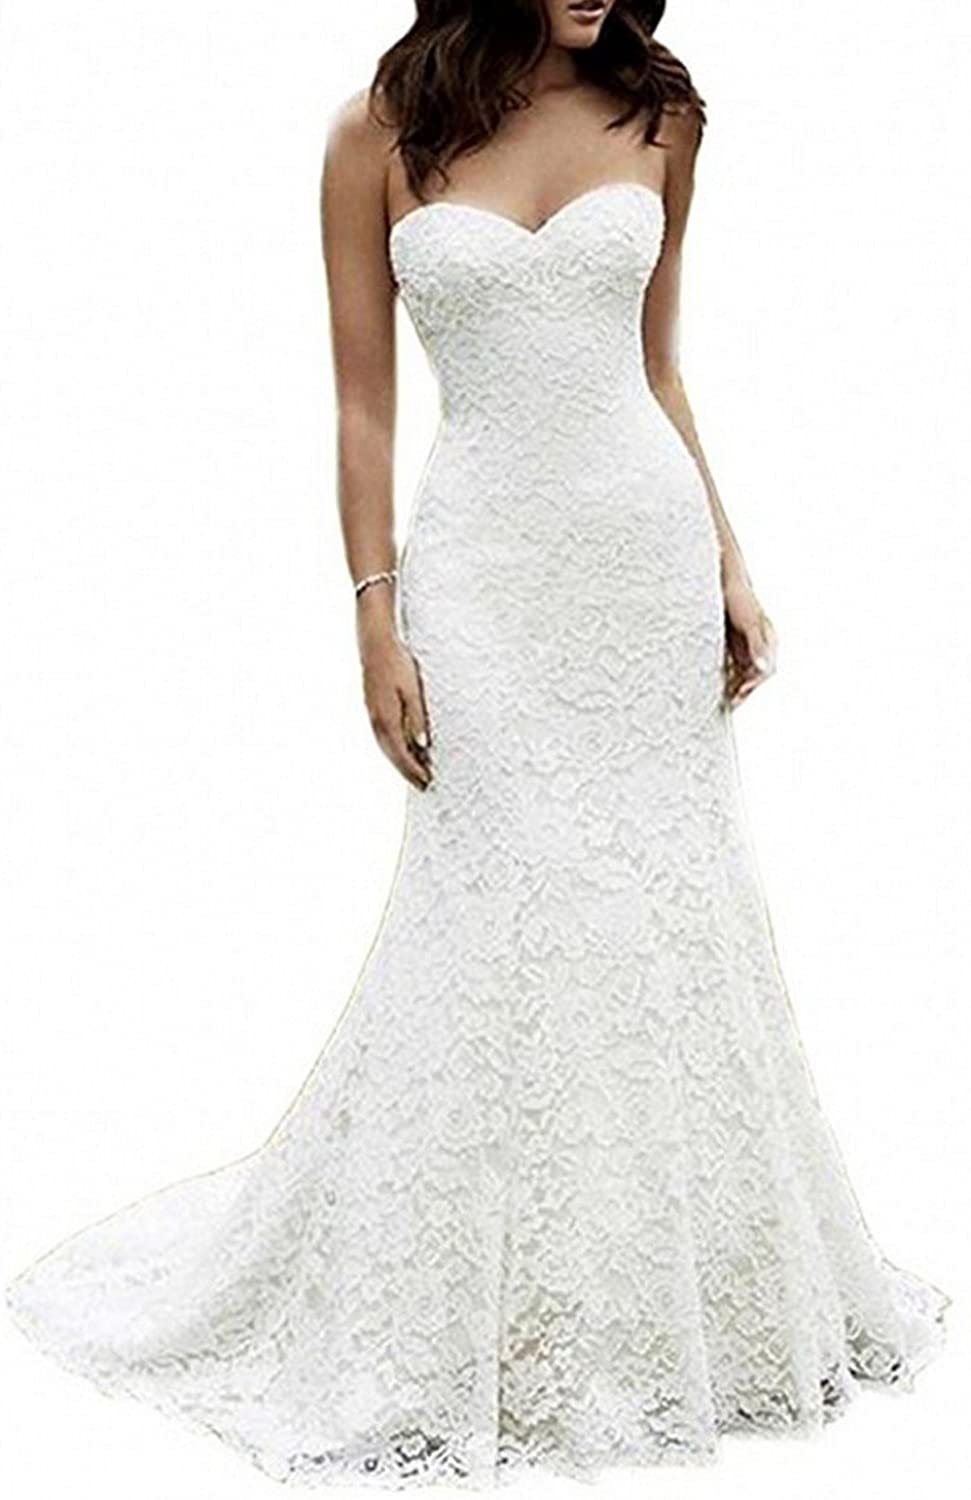 SIQINZHENG Women's Sweetheart Full Lace Beach Wedding Dress Mermaid Bridal  Gown | eBay